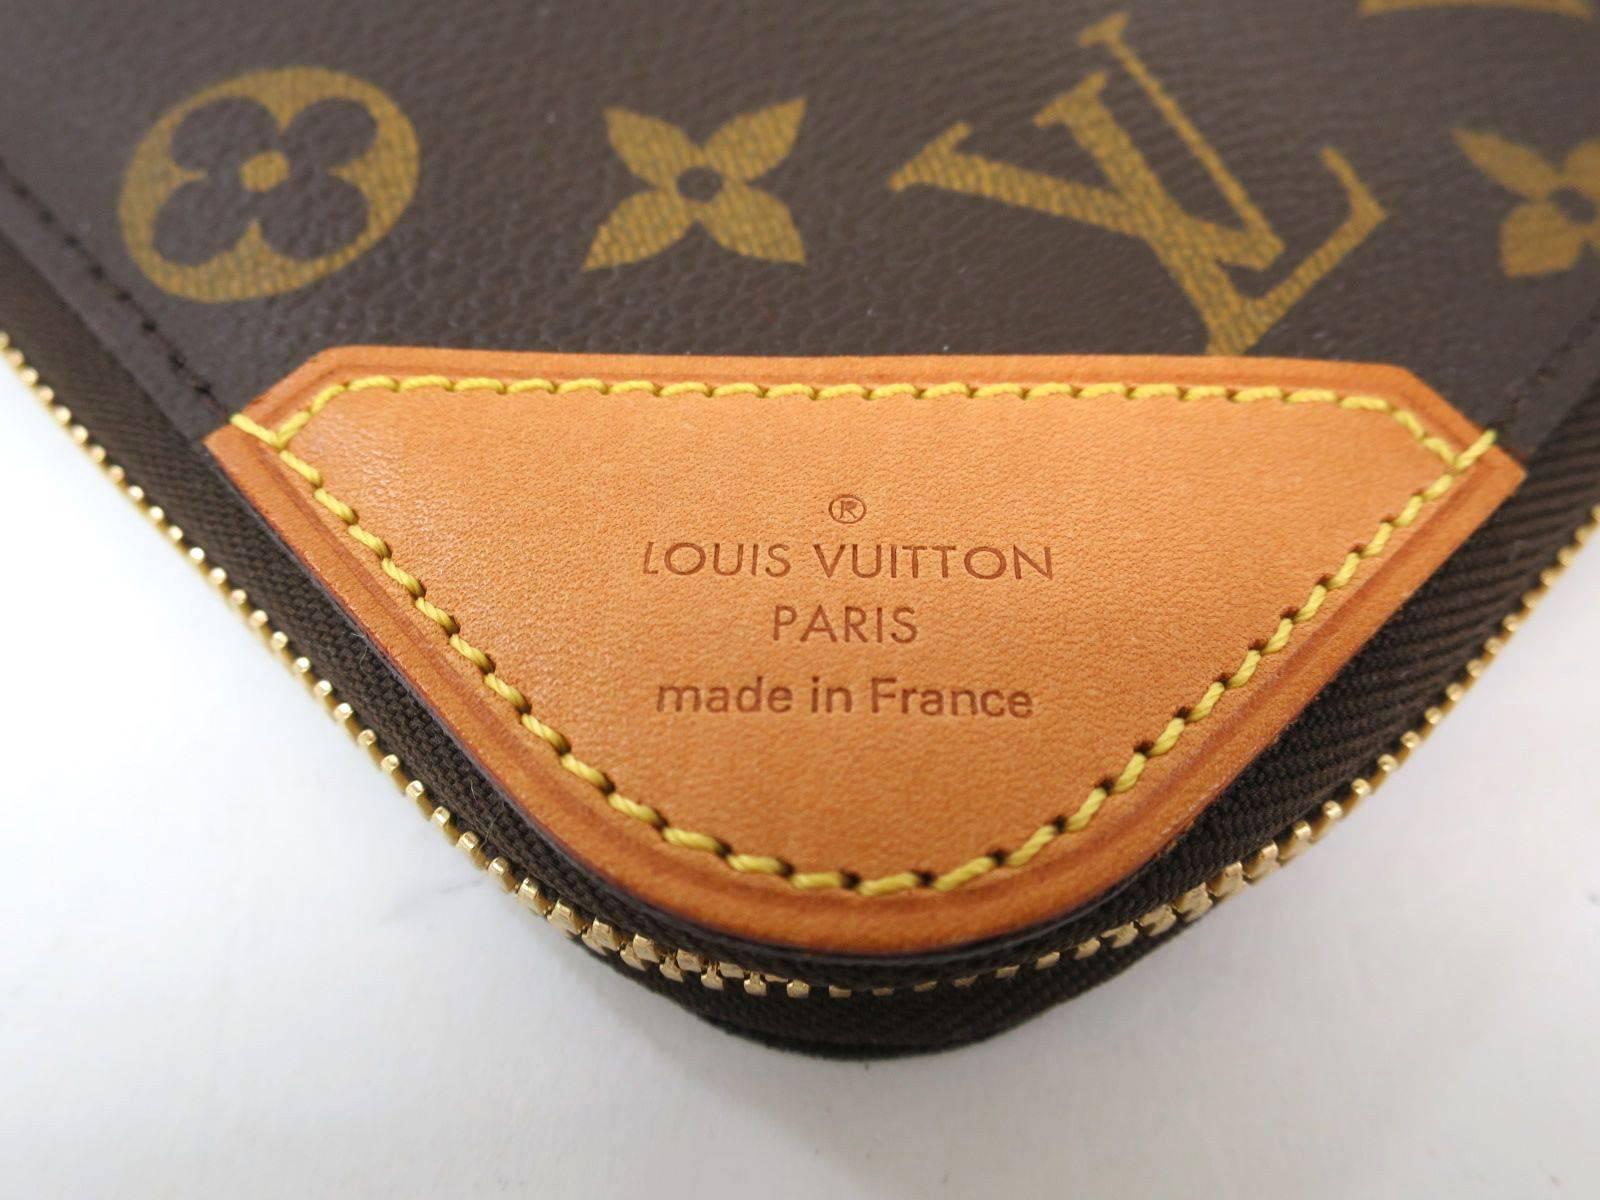 Louis Vuitton Monogram Canvas Men's Travel Vanity Accessory Tie Storage Case Bag

Monogram coated canvase
Gold hardware
Zipper closure
Made in France
Date code present
Measures 17.25